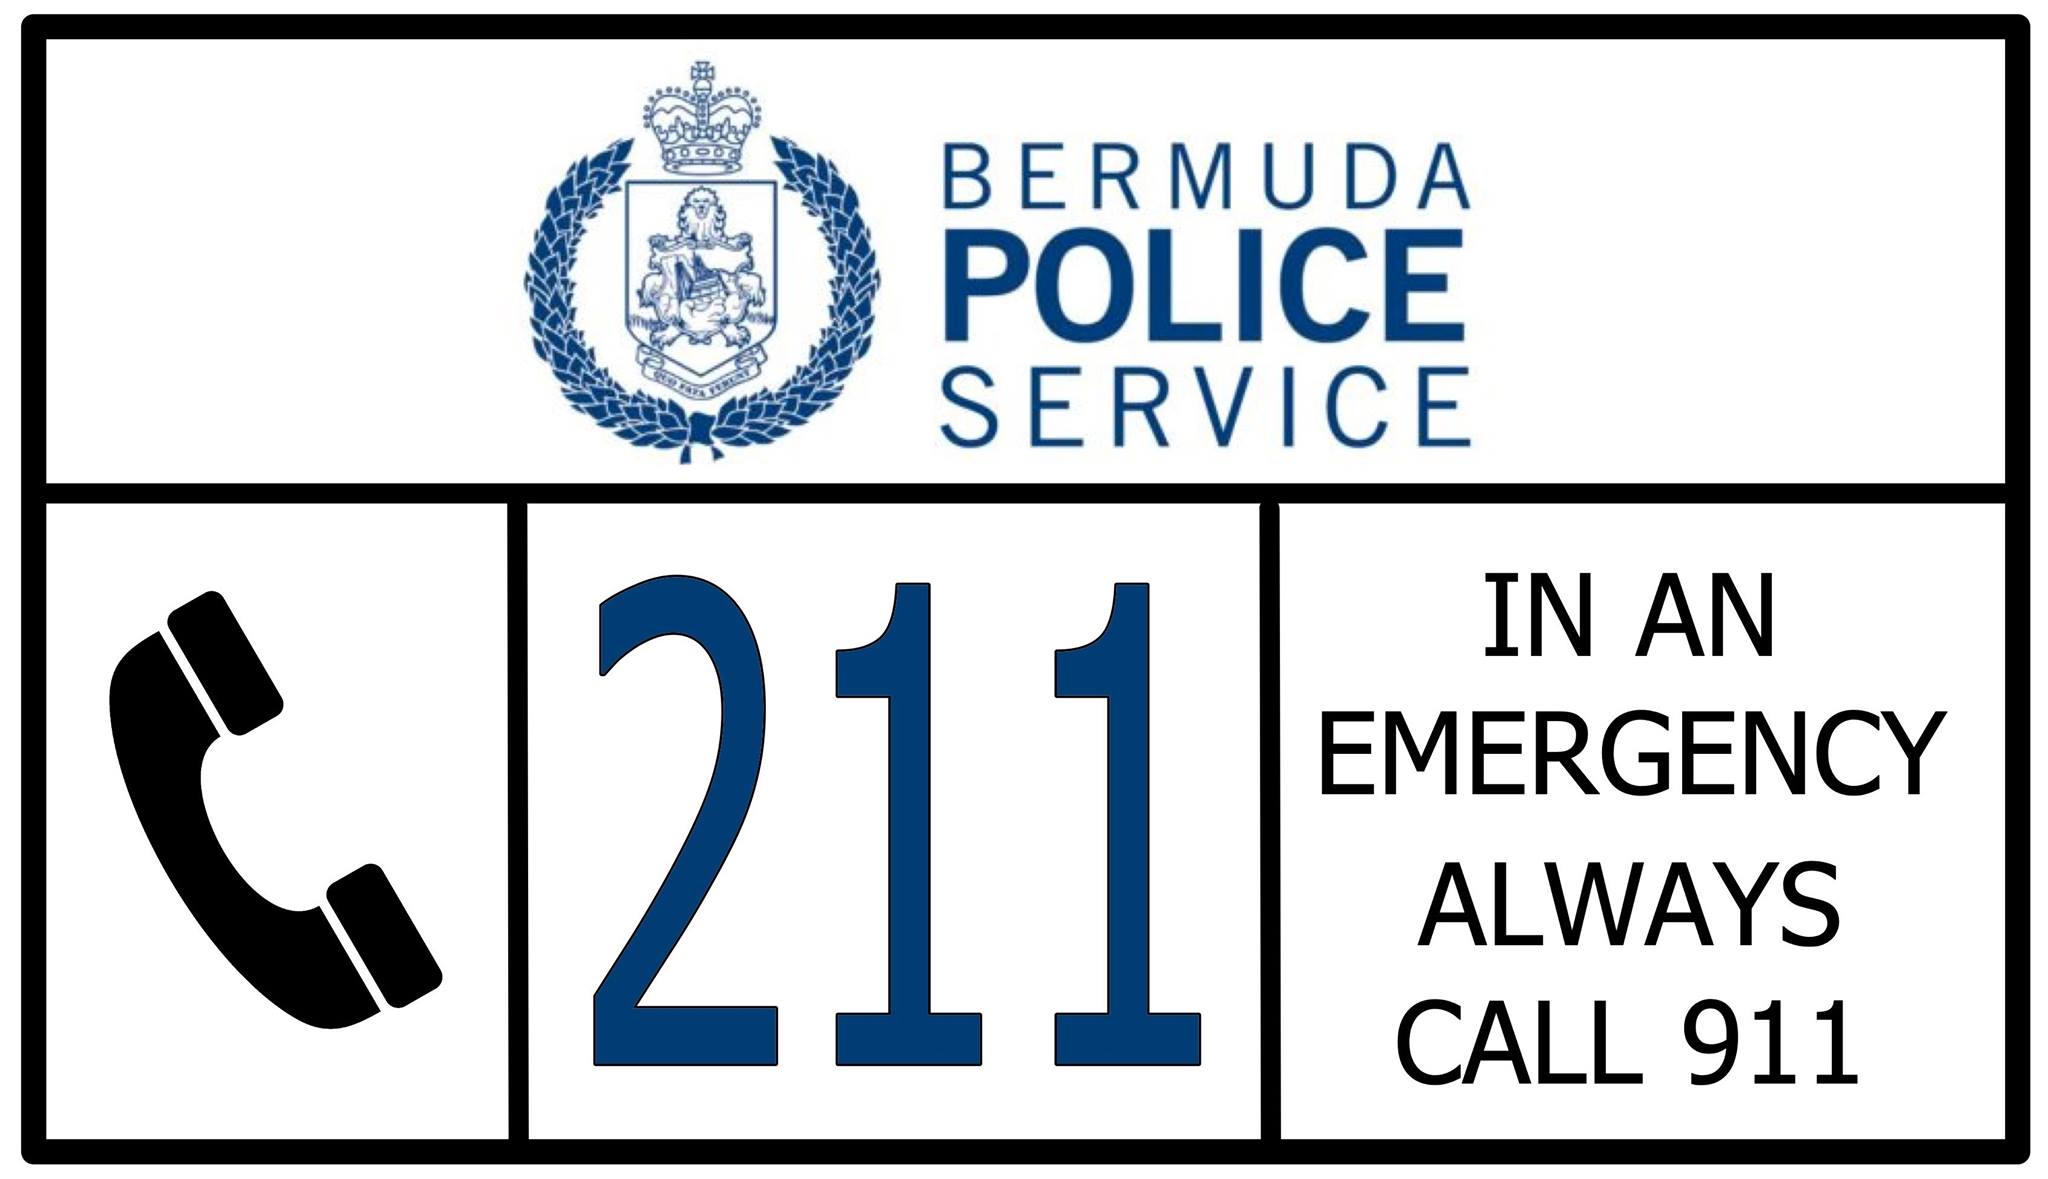 6th road traffic fatality in Bermuda